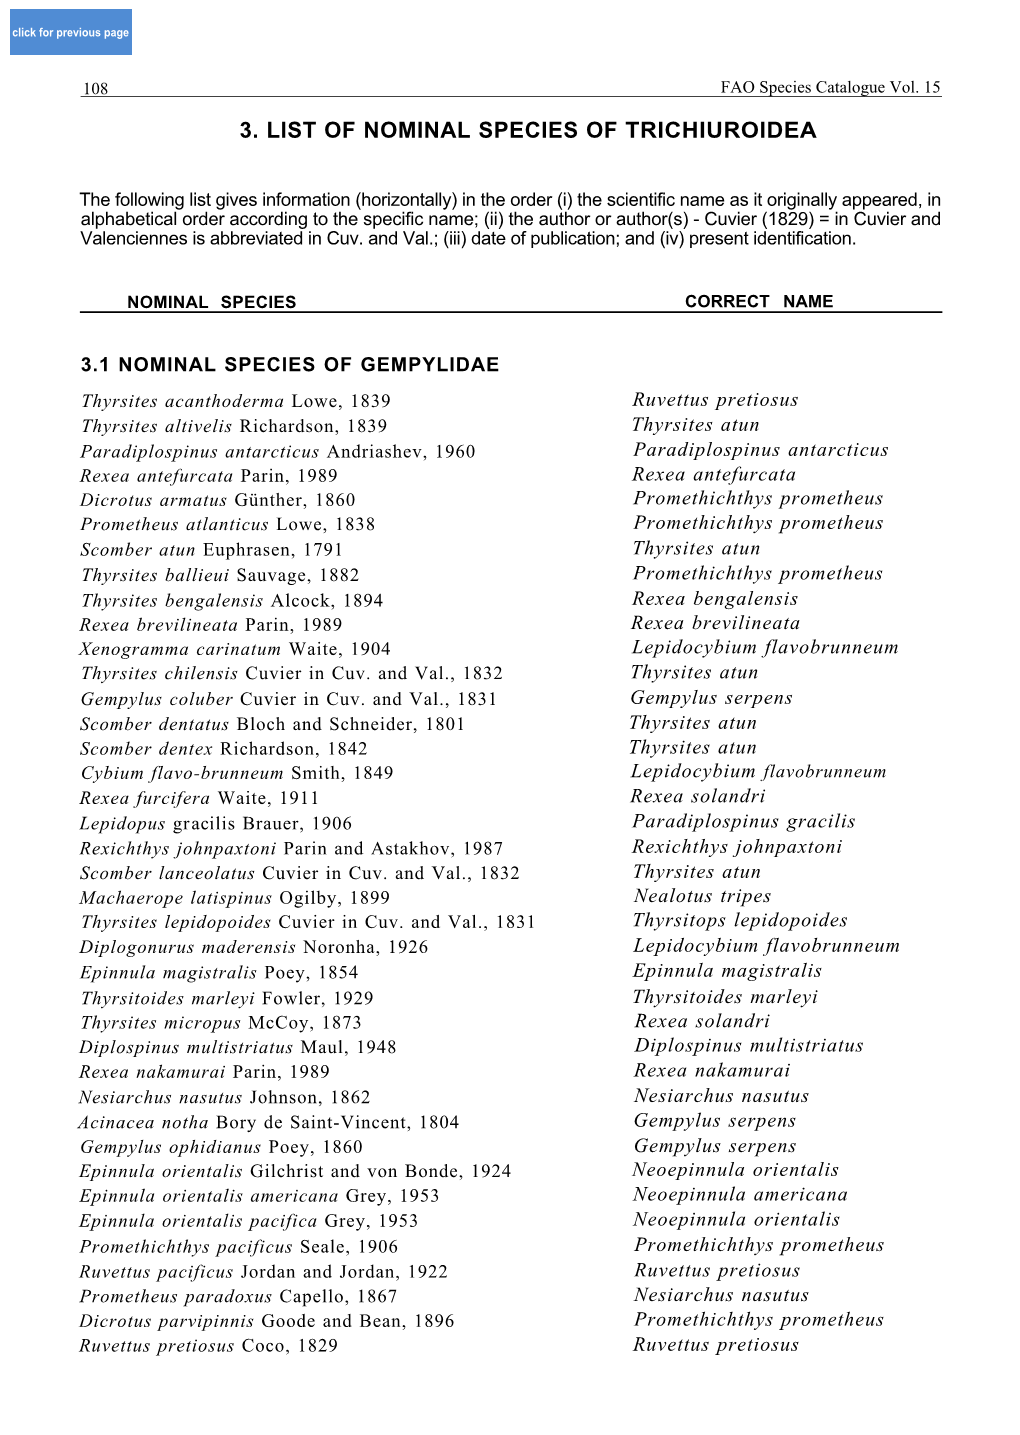 3. List of Nominal Species of Trichiuroidea